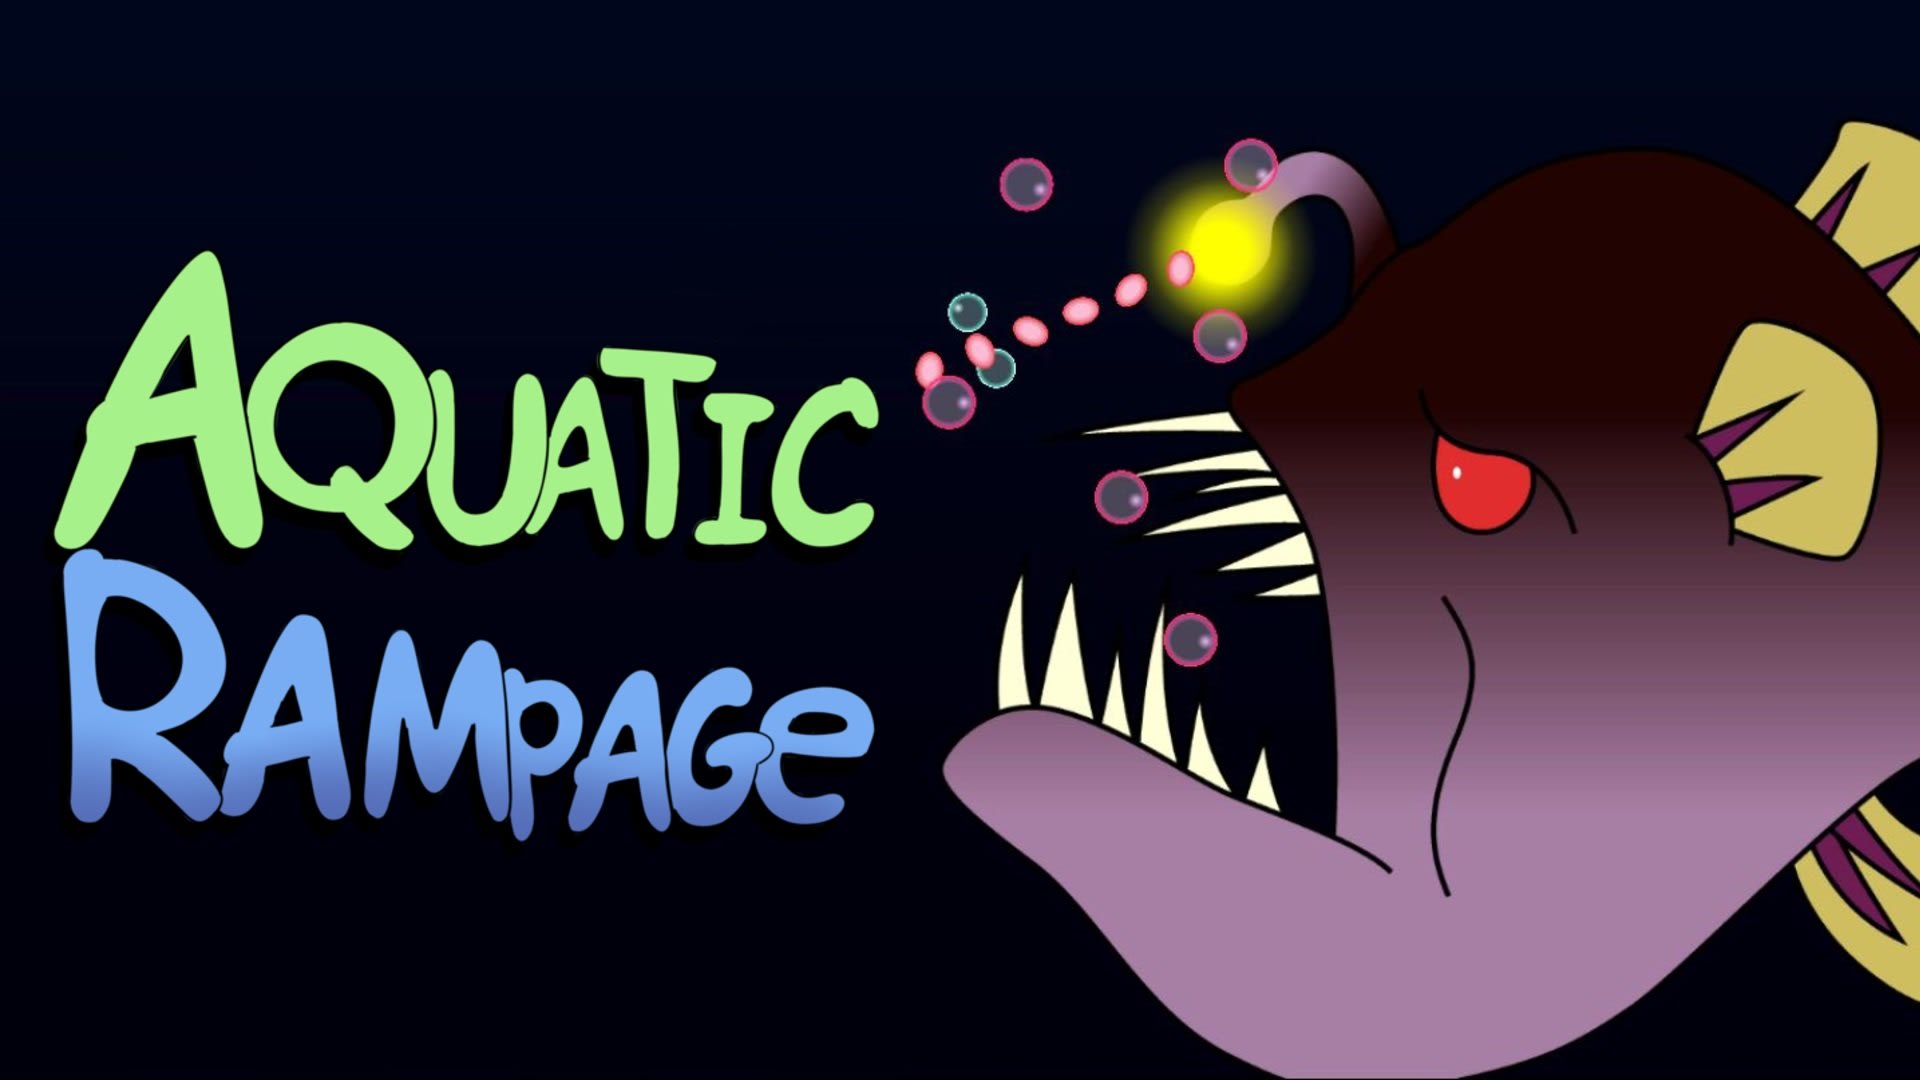 Aquatic Rampage